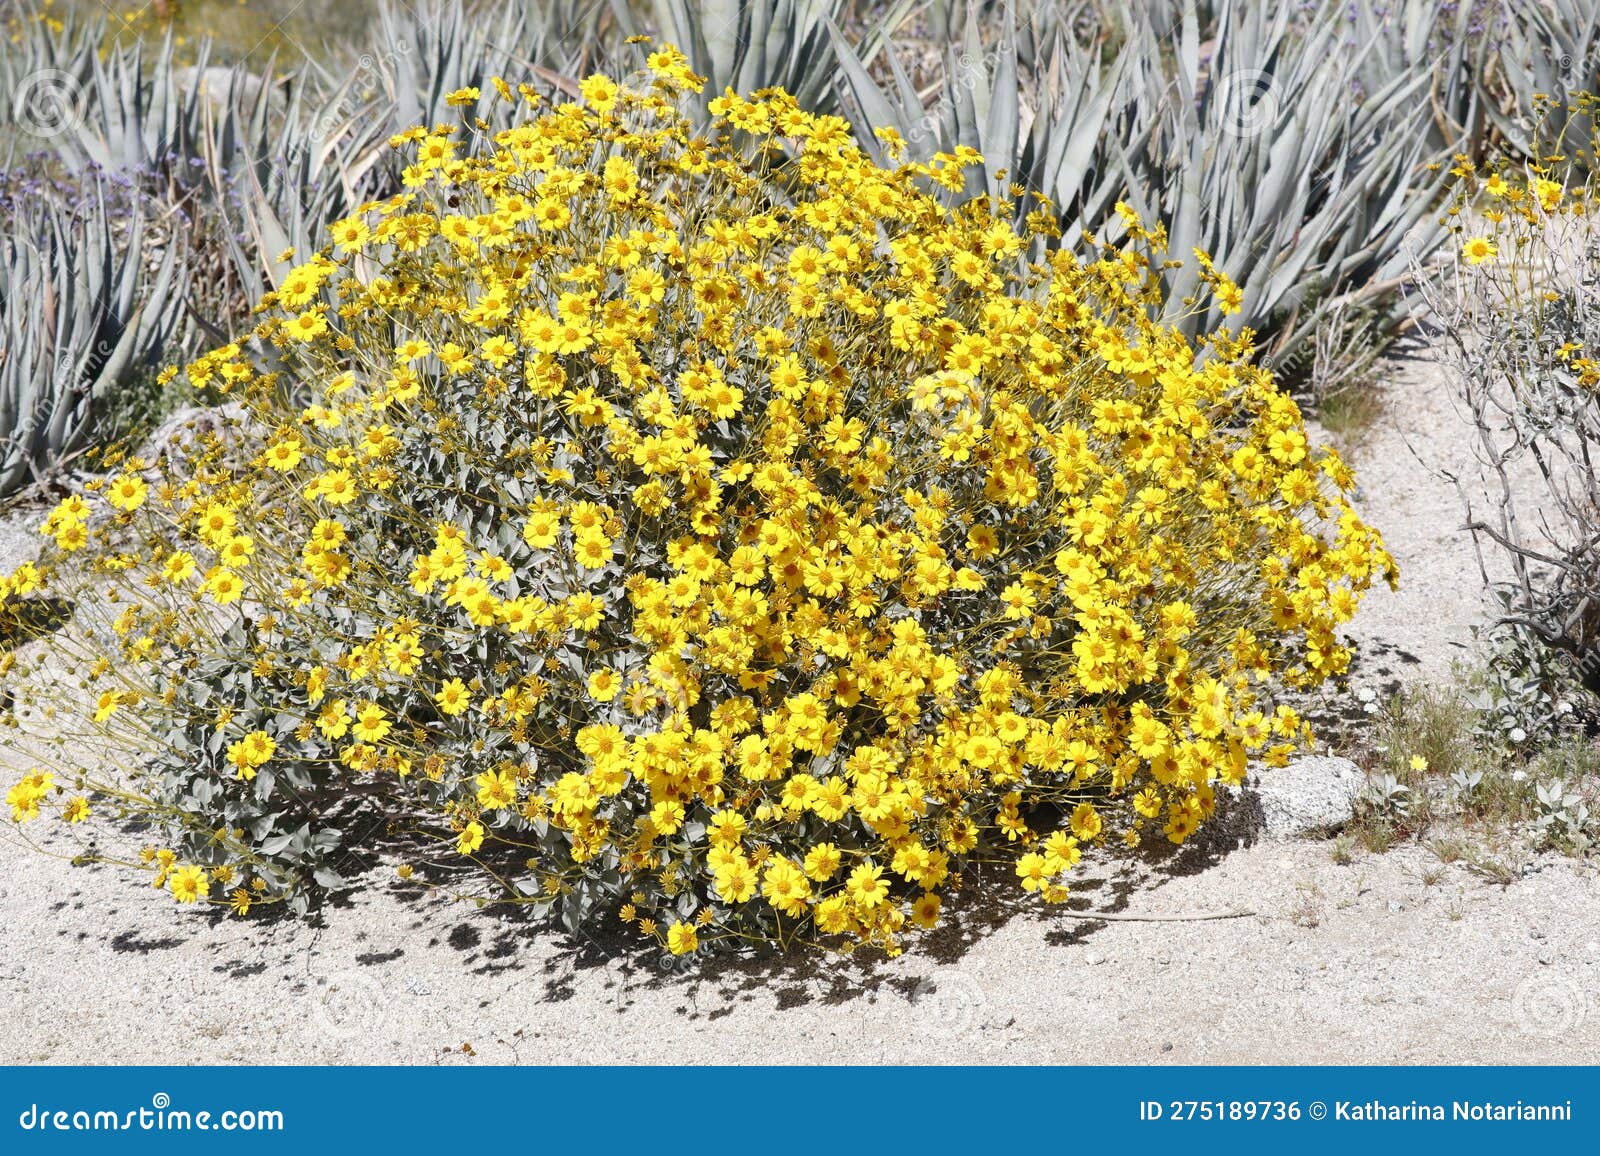 desert bloom series - brittlebush - encelia farinosa